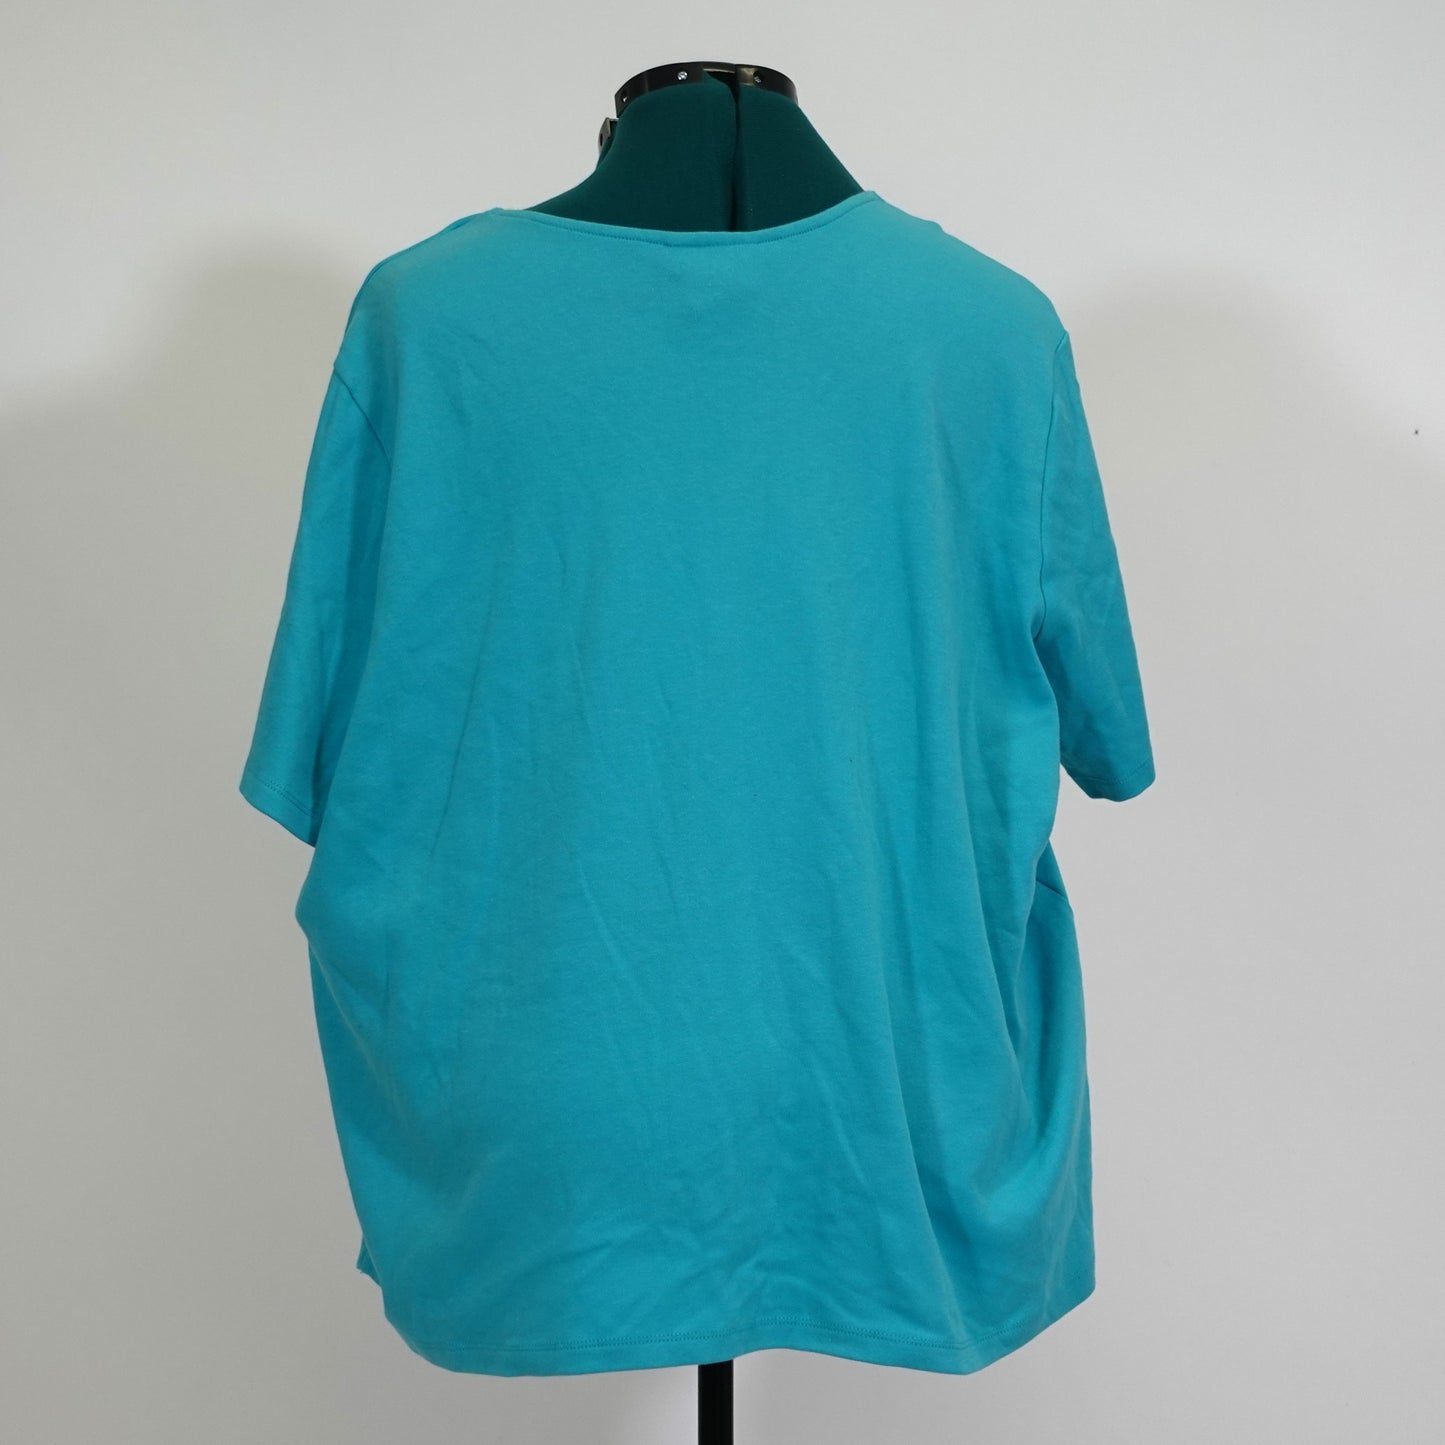 Vintage Aqua Blue Short Sleeve Top